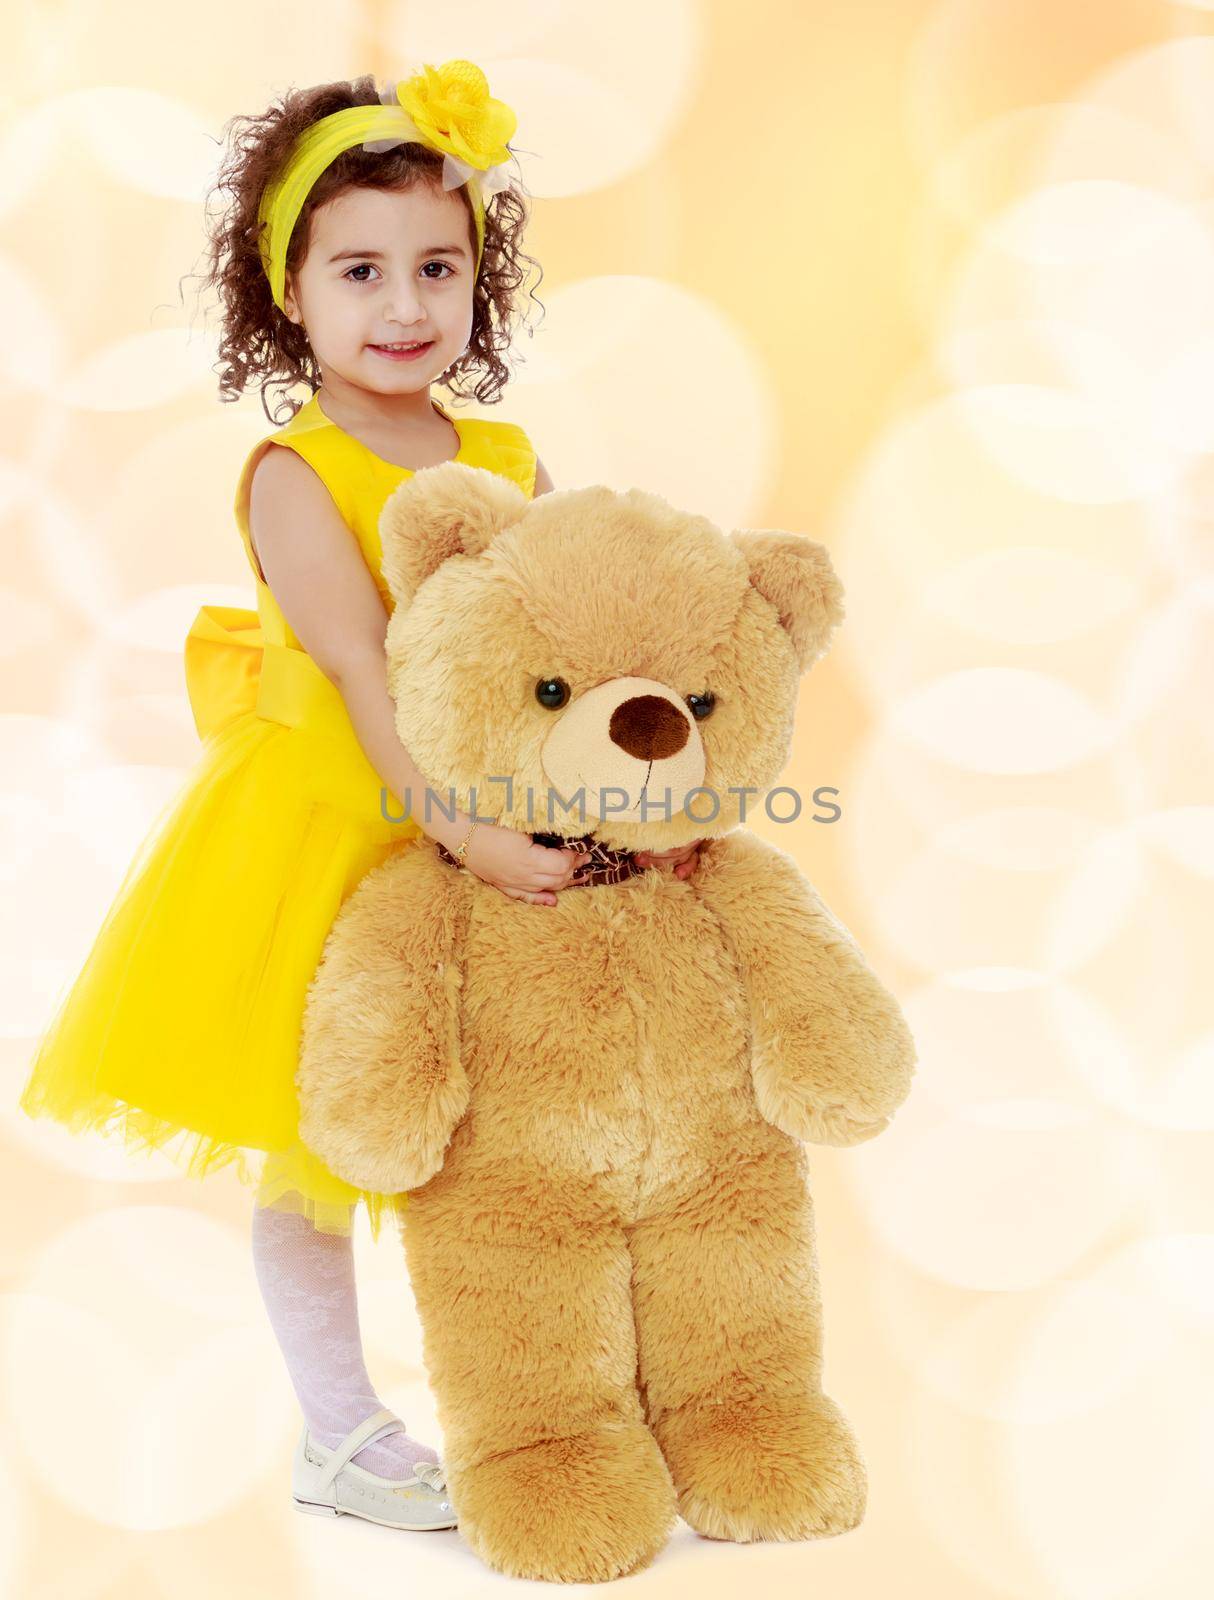 Little girl hugging Teddy bear by kolesnikov_studio